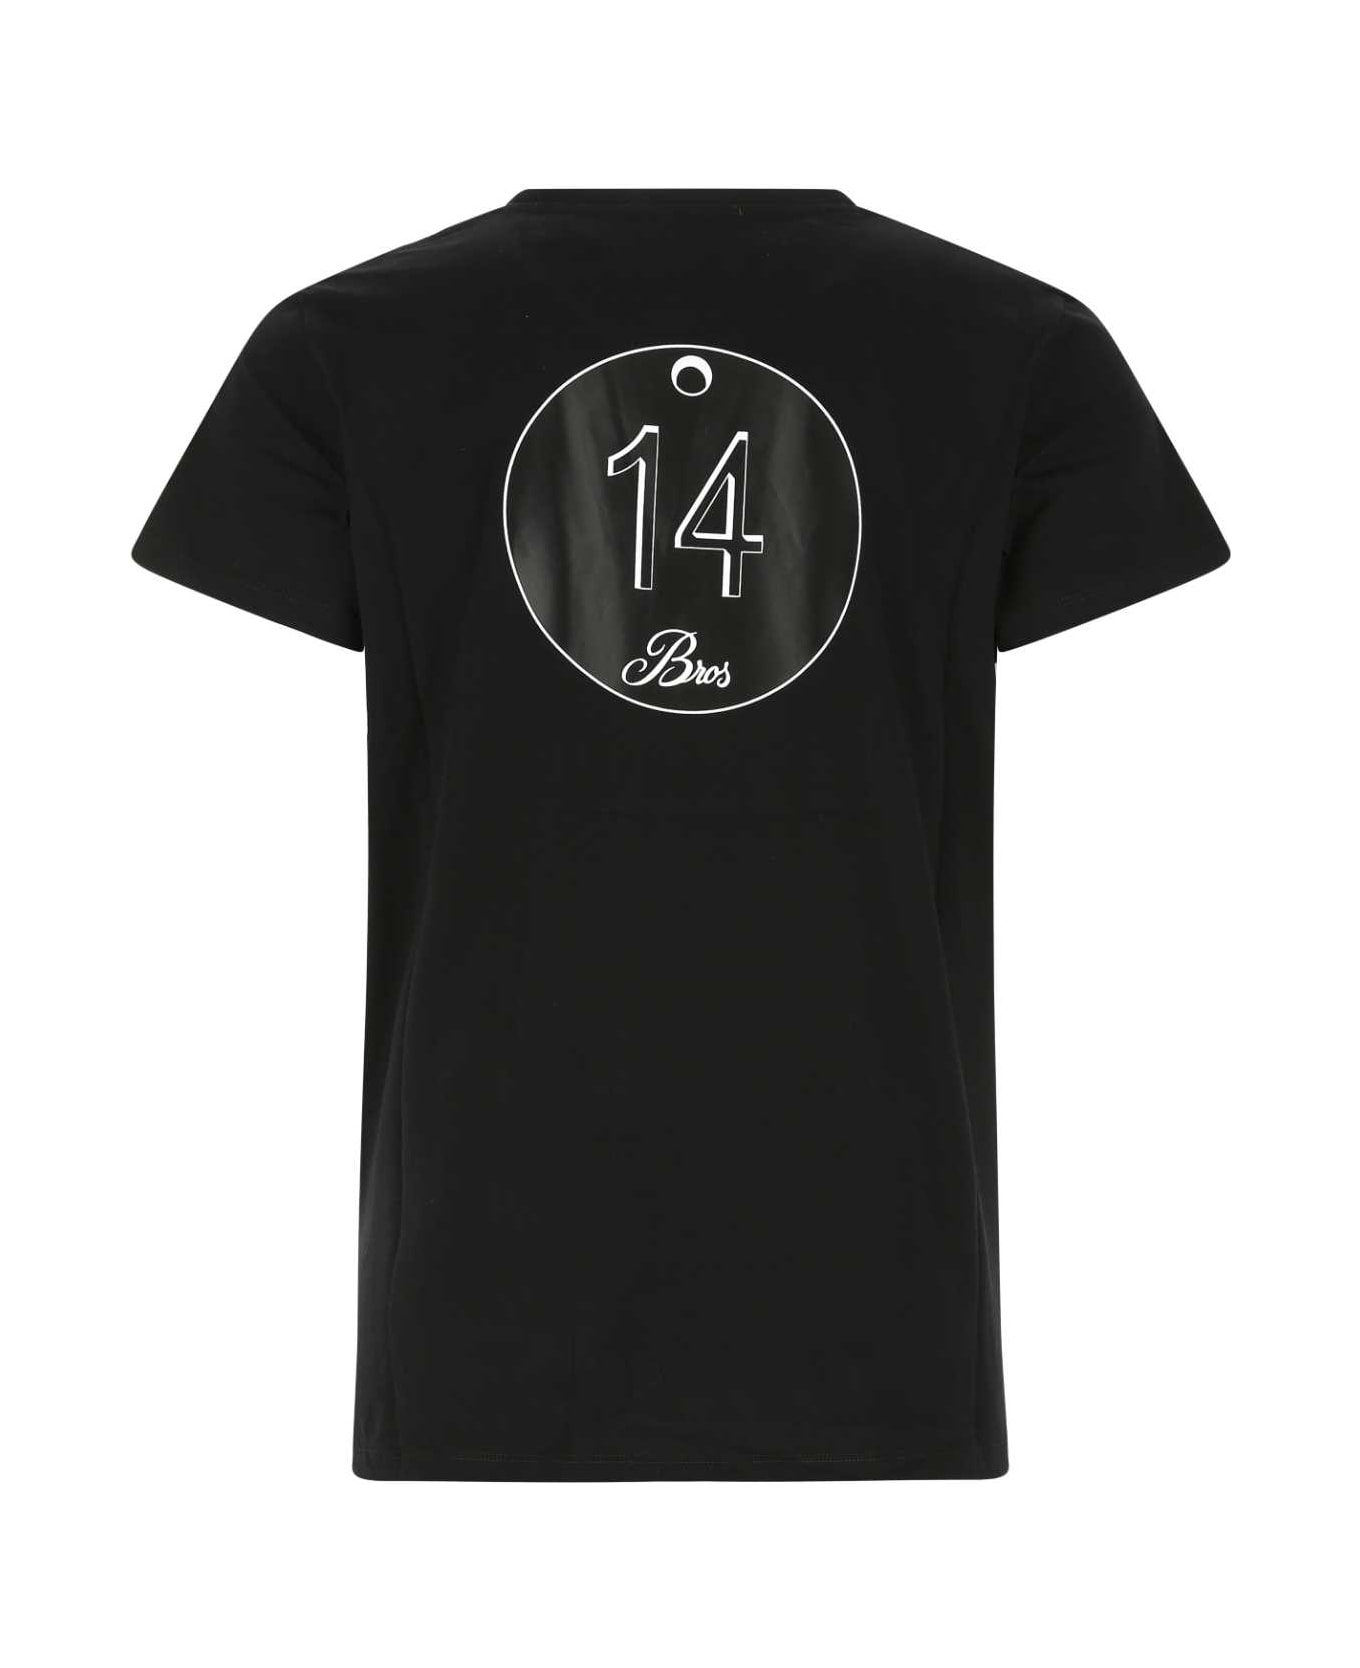 14 Bros Black Cotton T-shirt - 900 シャツ